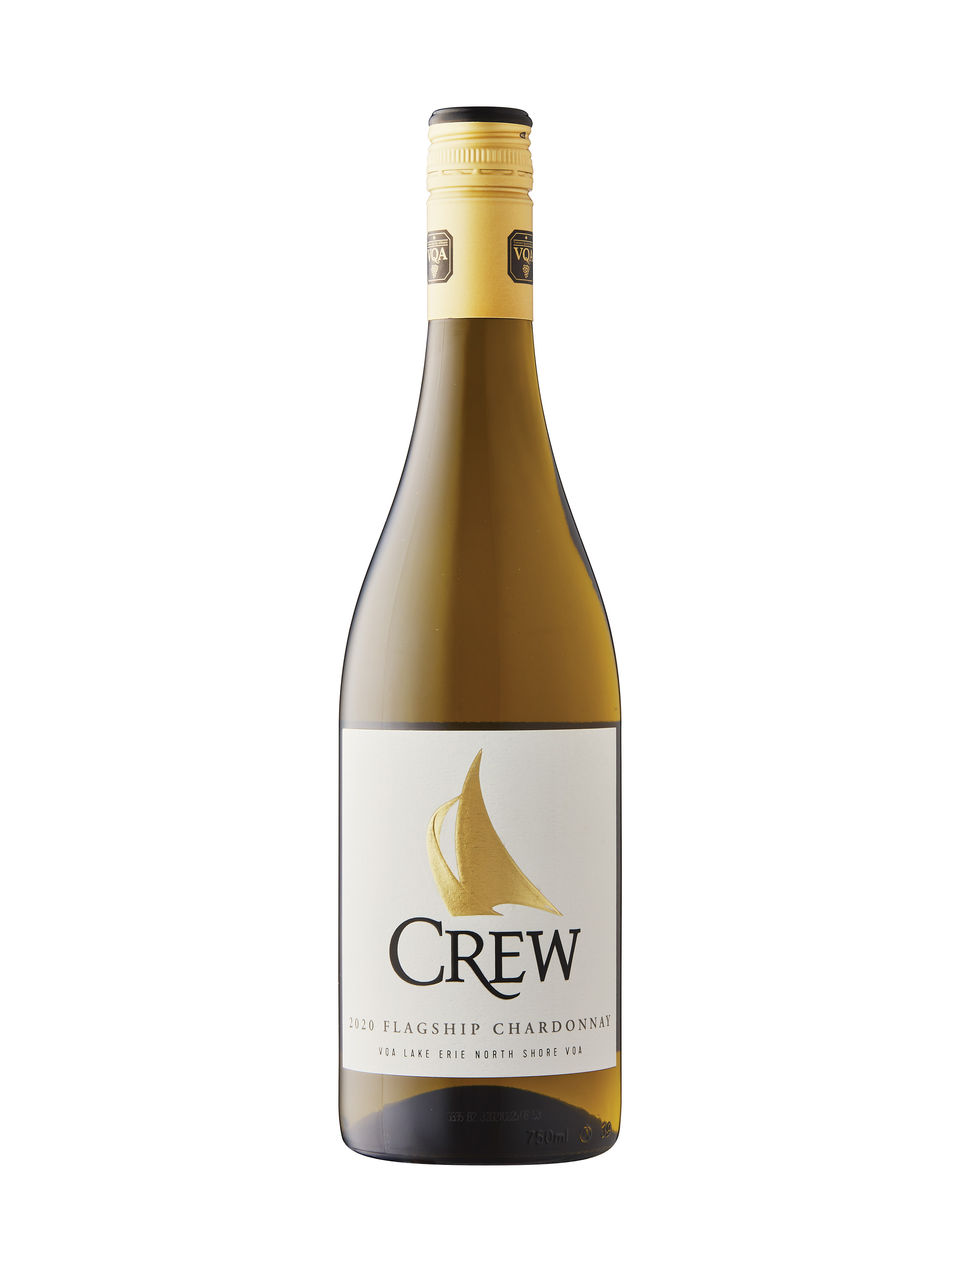 CREW Flagship Chardonnay 2020 - View Image 1